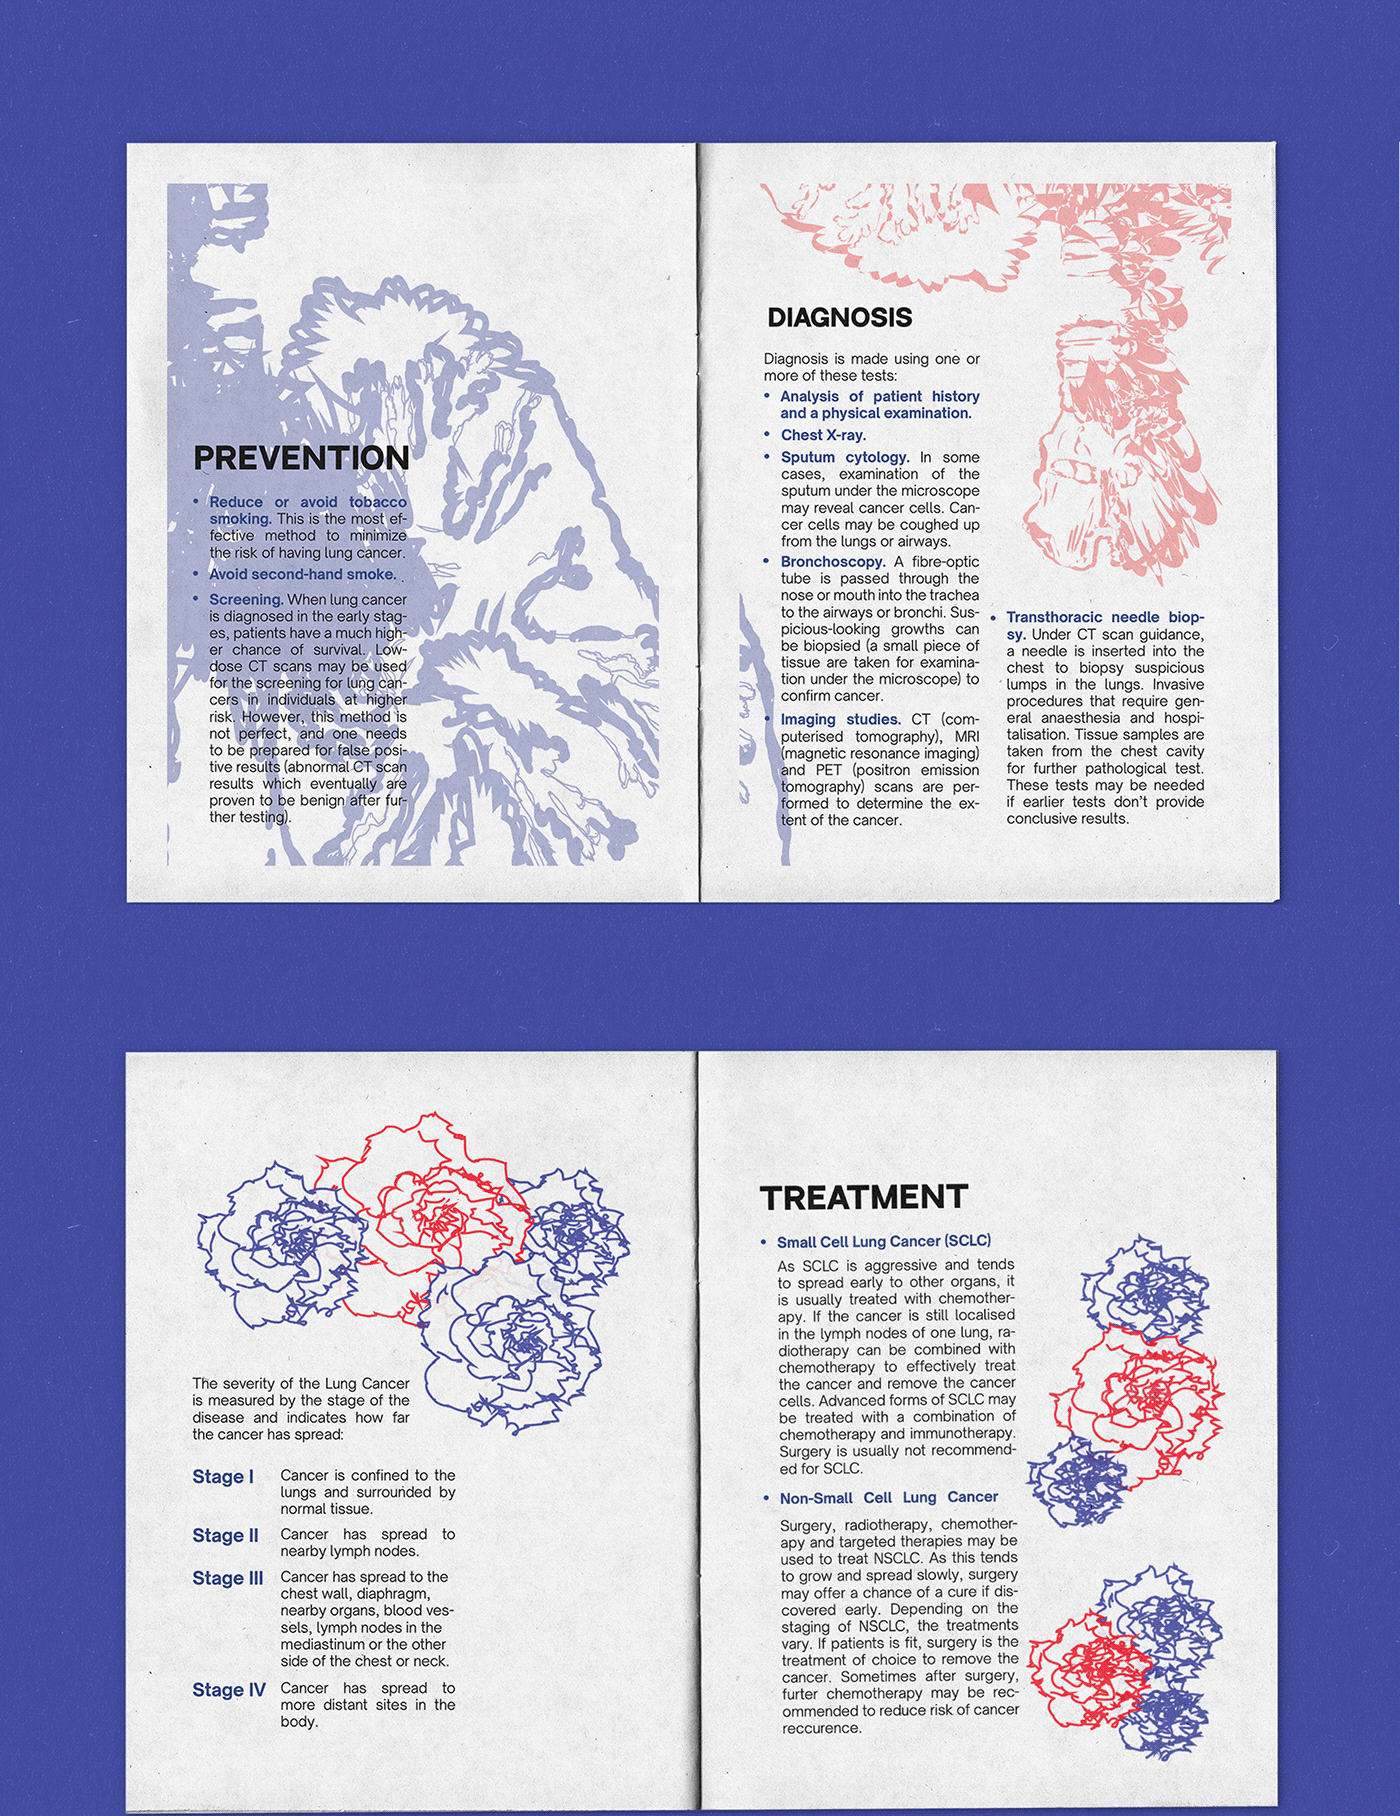 brochure cancer design graphic design  Layout Lung Cancer publication typography   Zine 